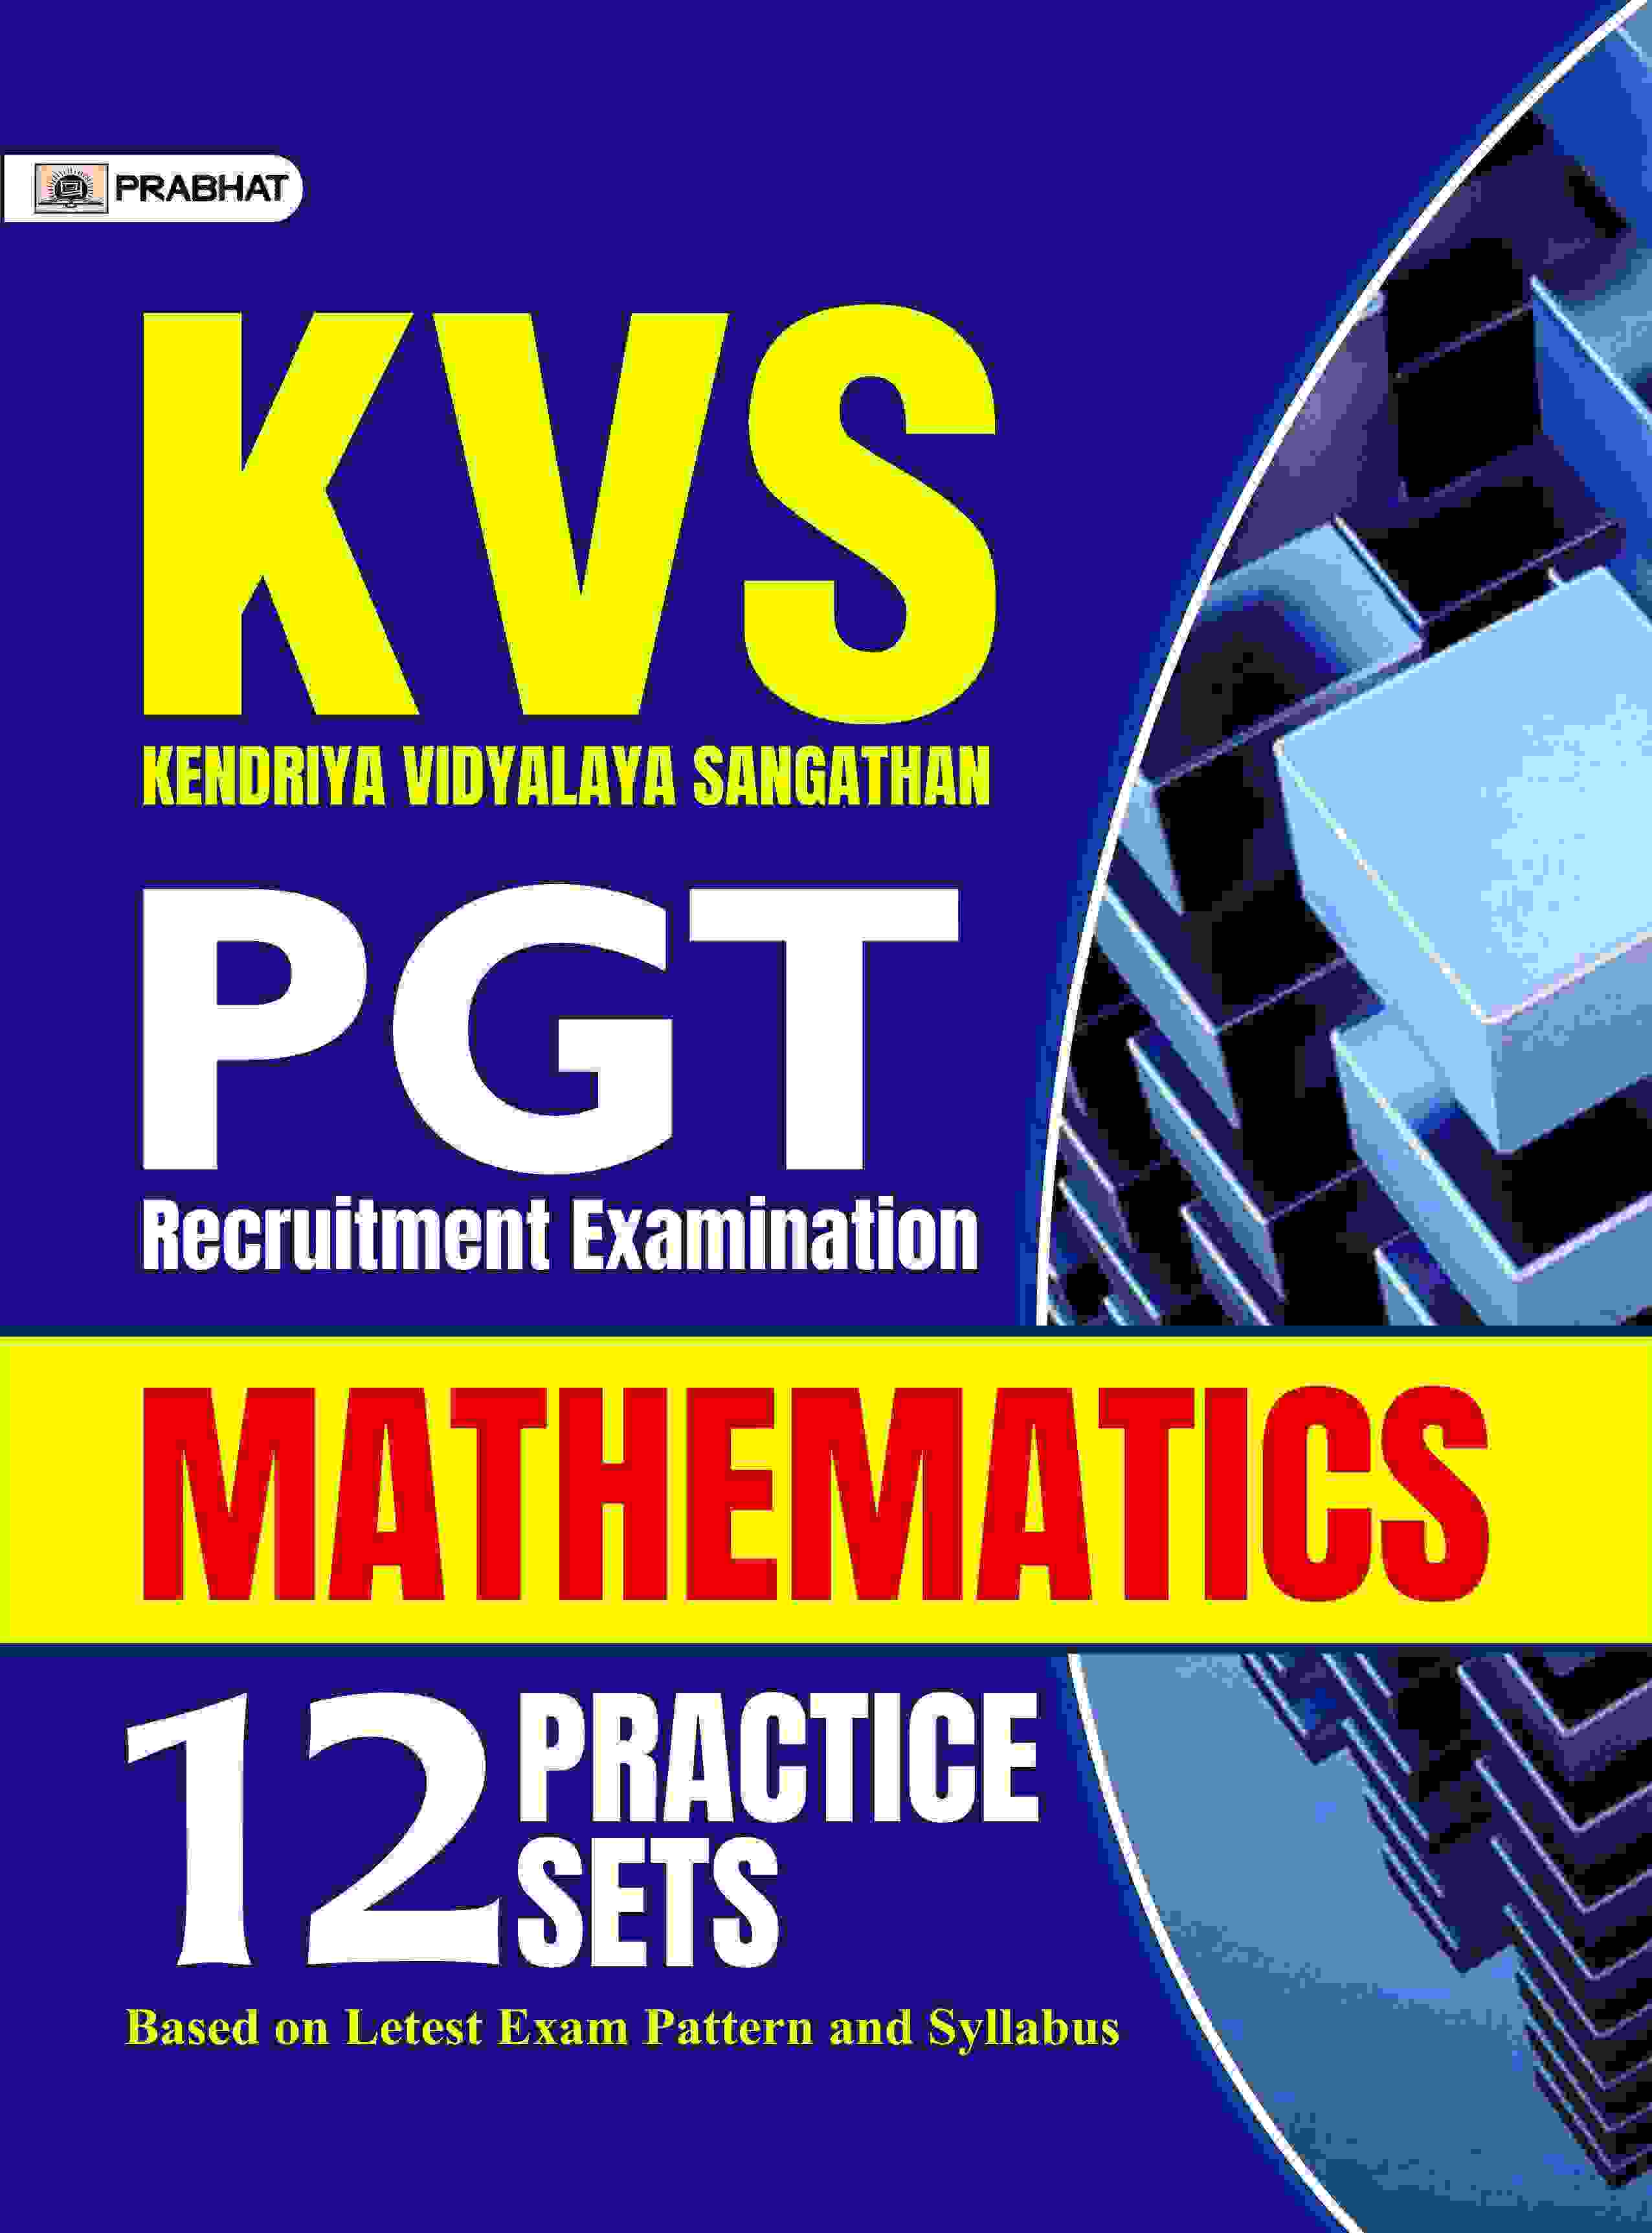 mathematics 10 practice and homework book pdf